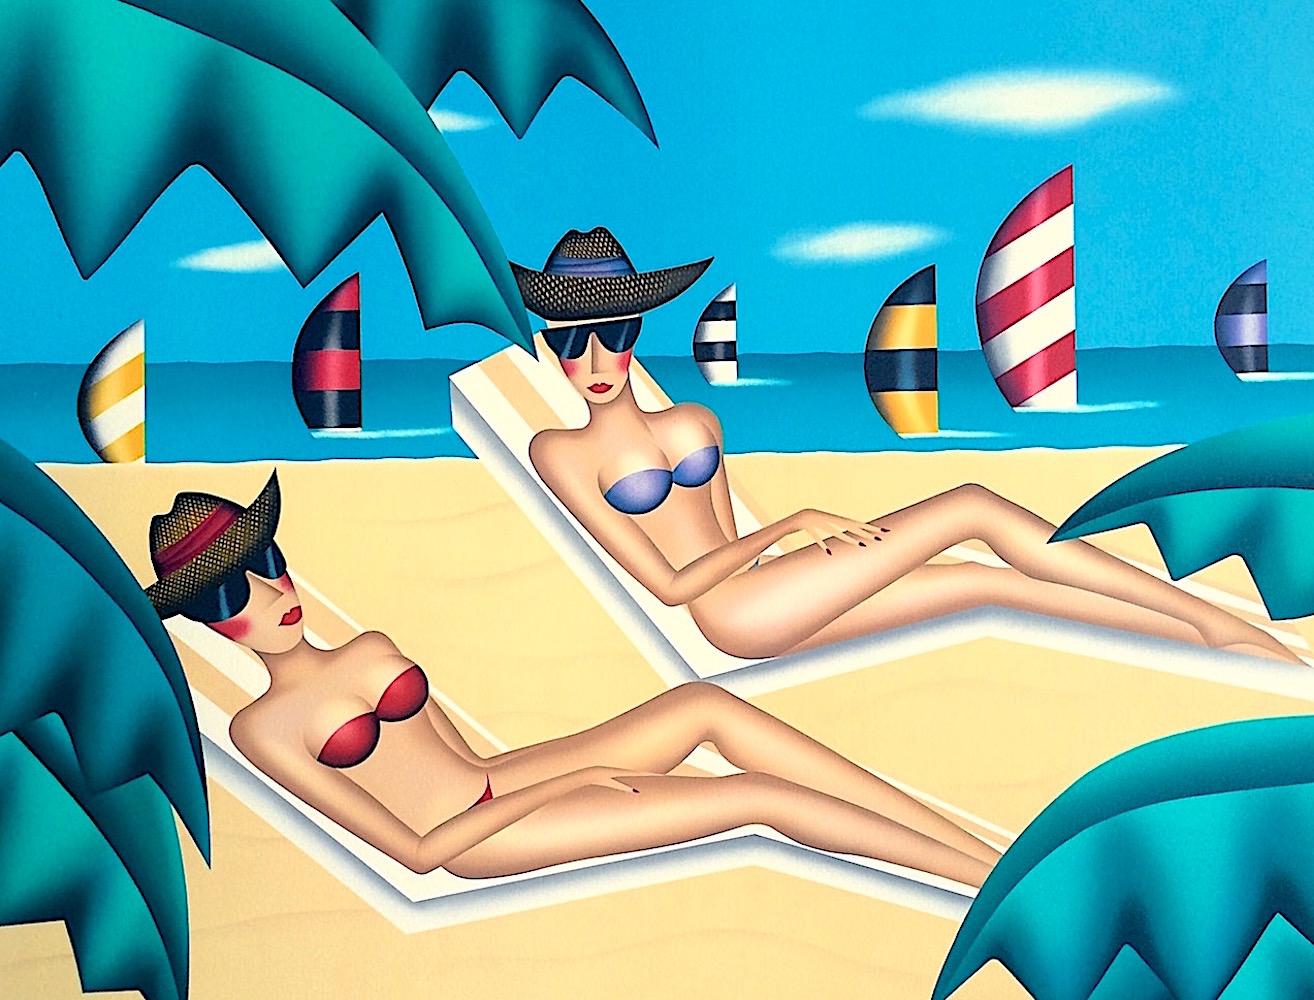 SUNBATHERS Signed Lithograph, Women in Bikinis, Sunglasses, Beach, Sailboats - Print by Robin Morris